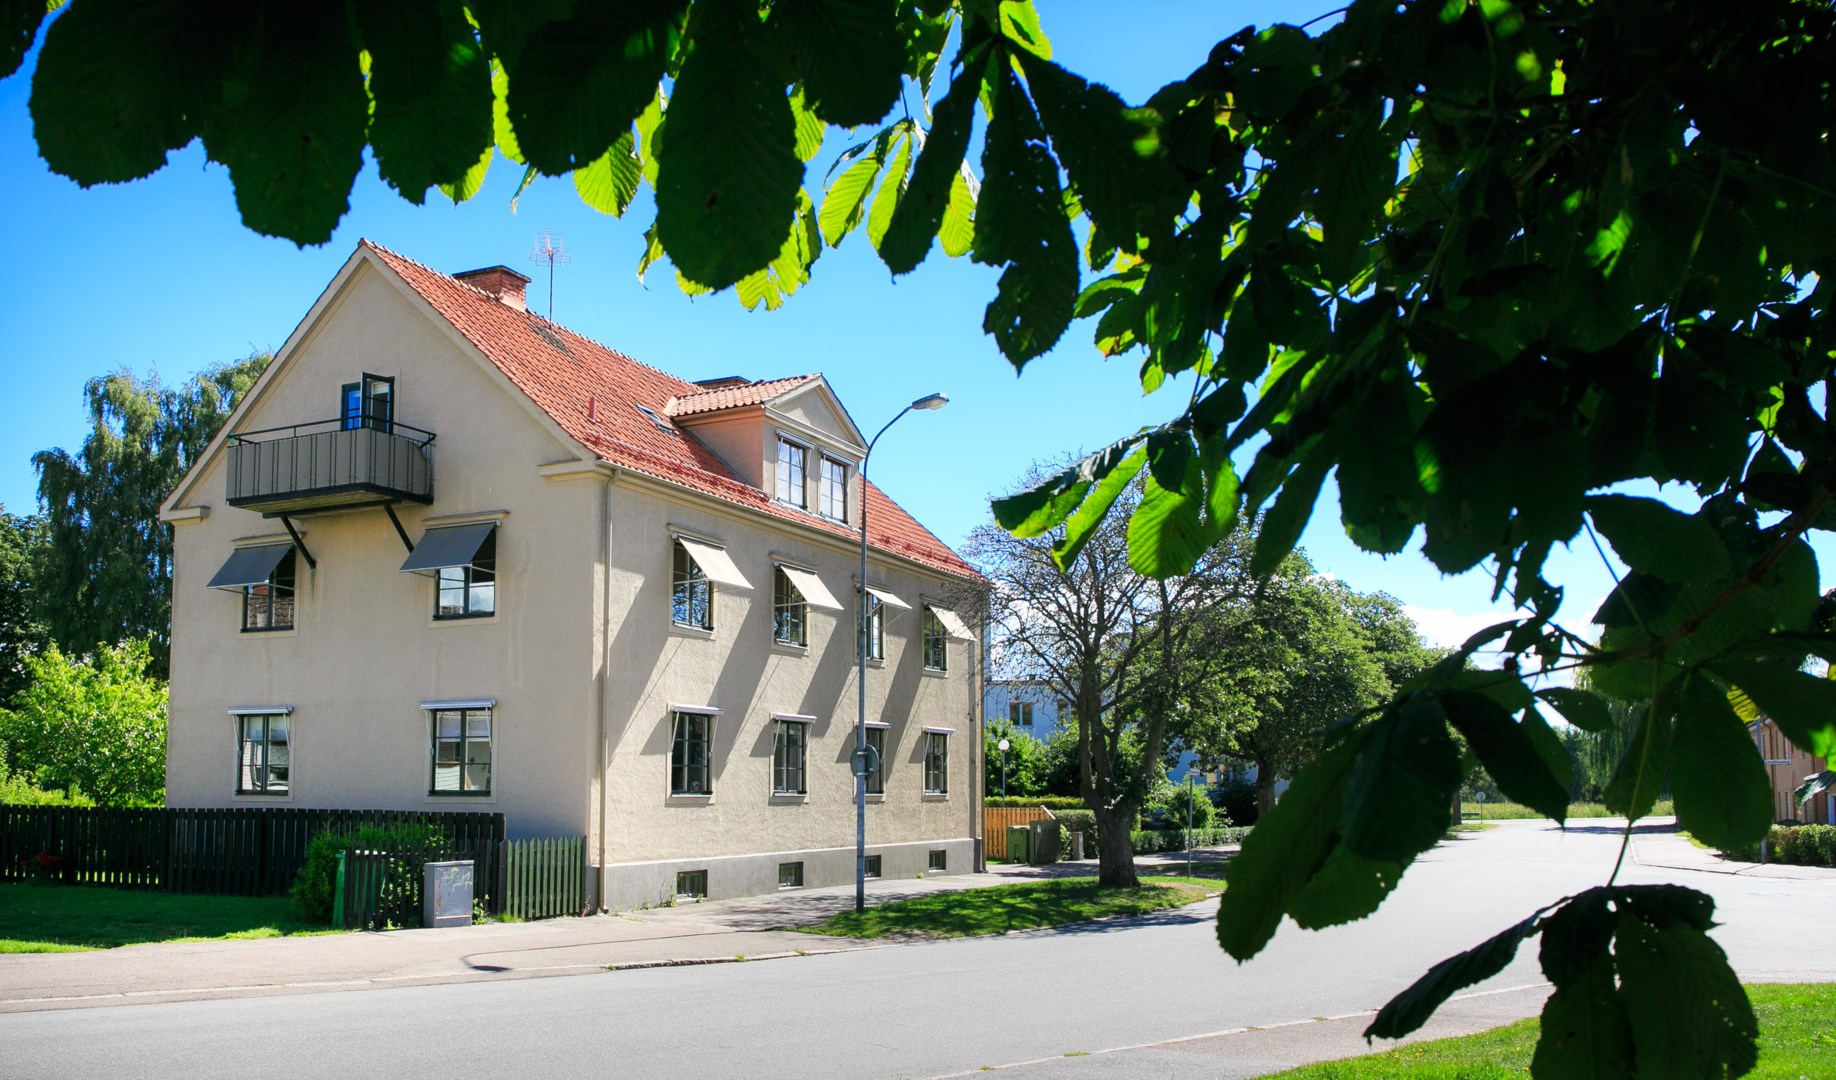 Bostadsrätt i Centralt, Kalmar, Domaregatan 4A